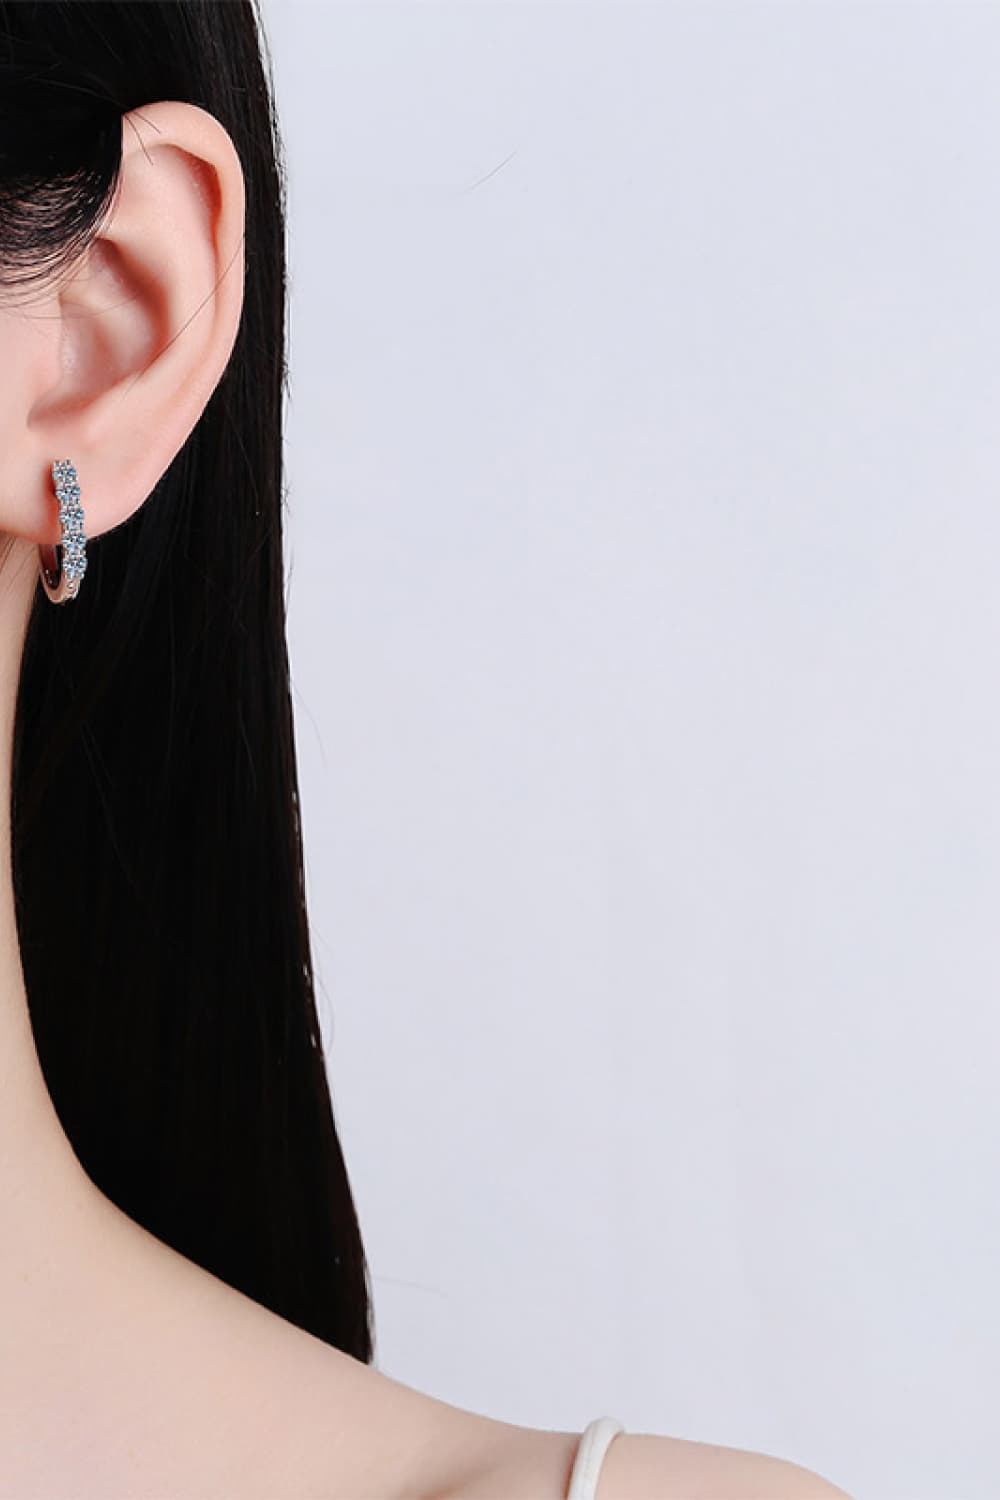 1 Carat Moissanite Hoop Earrings - bertofonsi